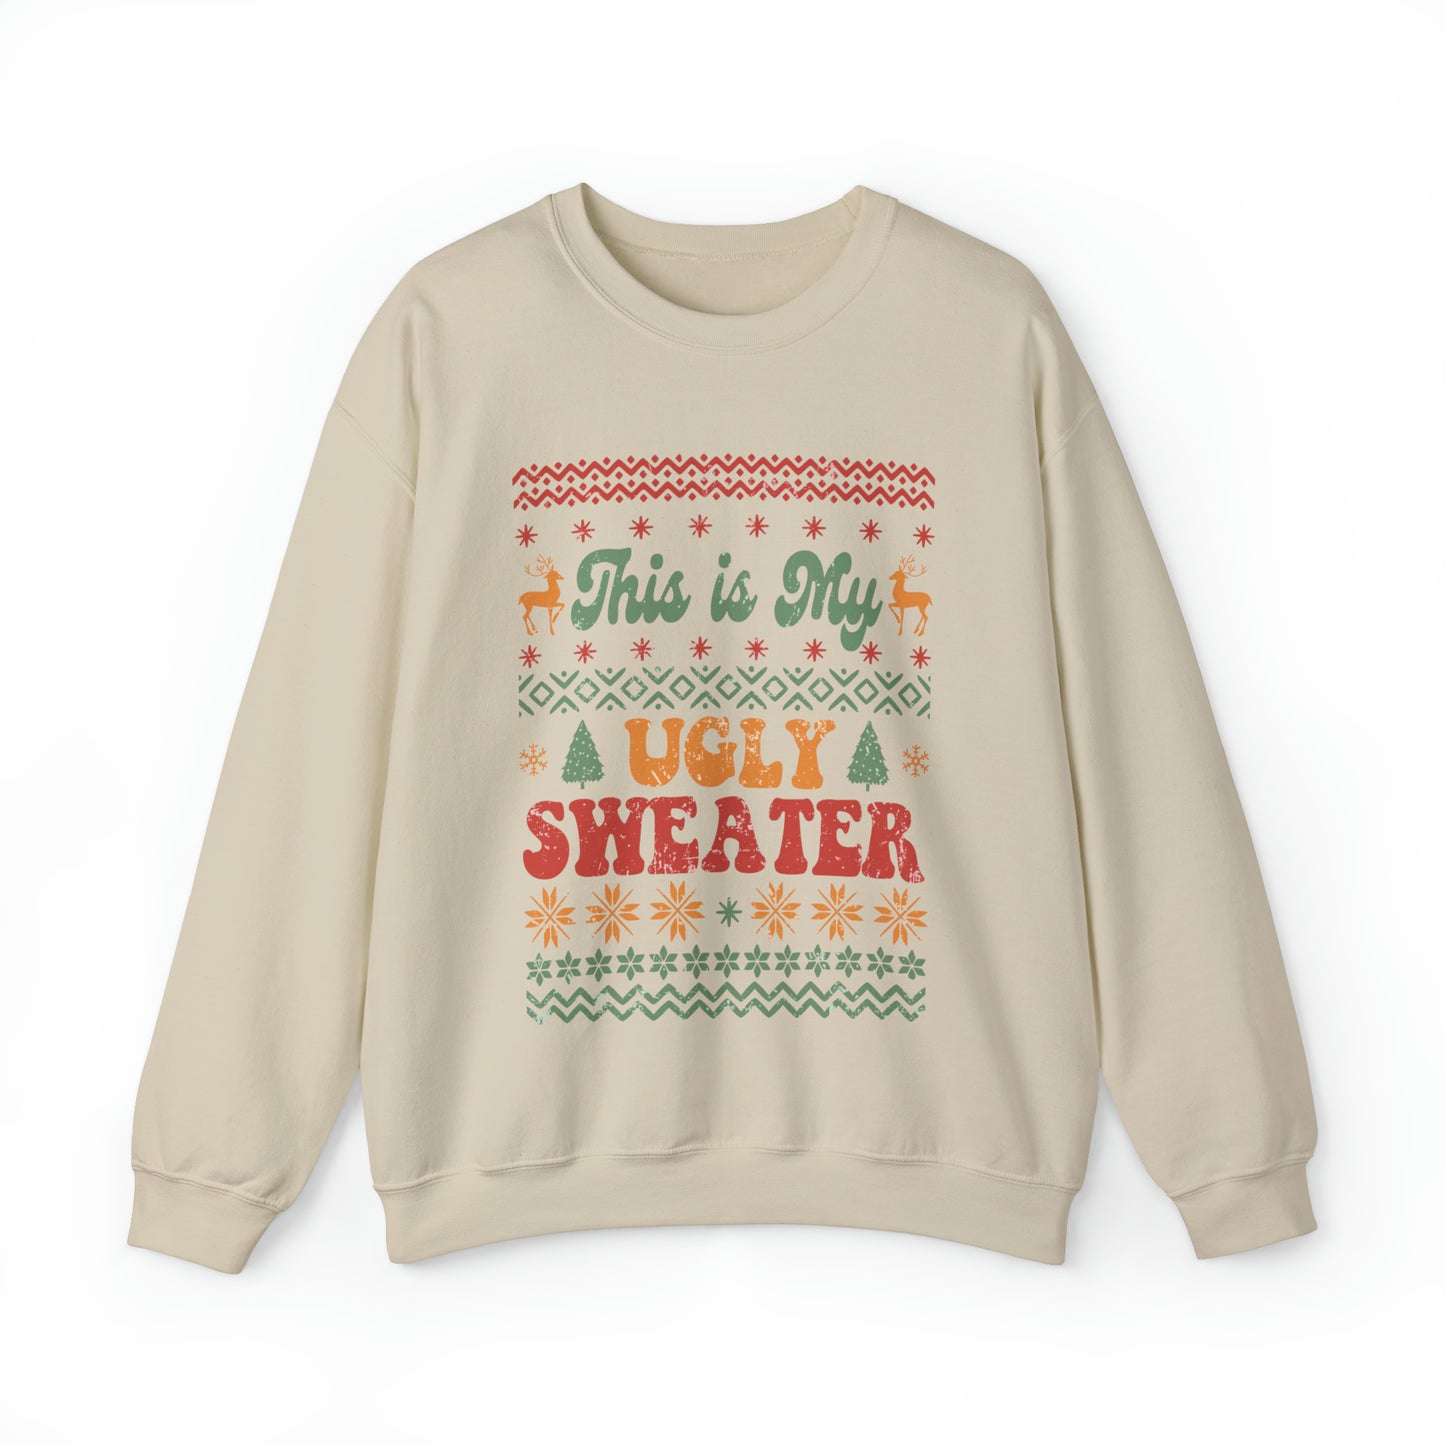 This is My Ugly Sweater Adult Unisex Christmas Sweatshirt